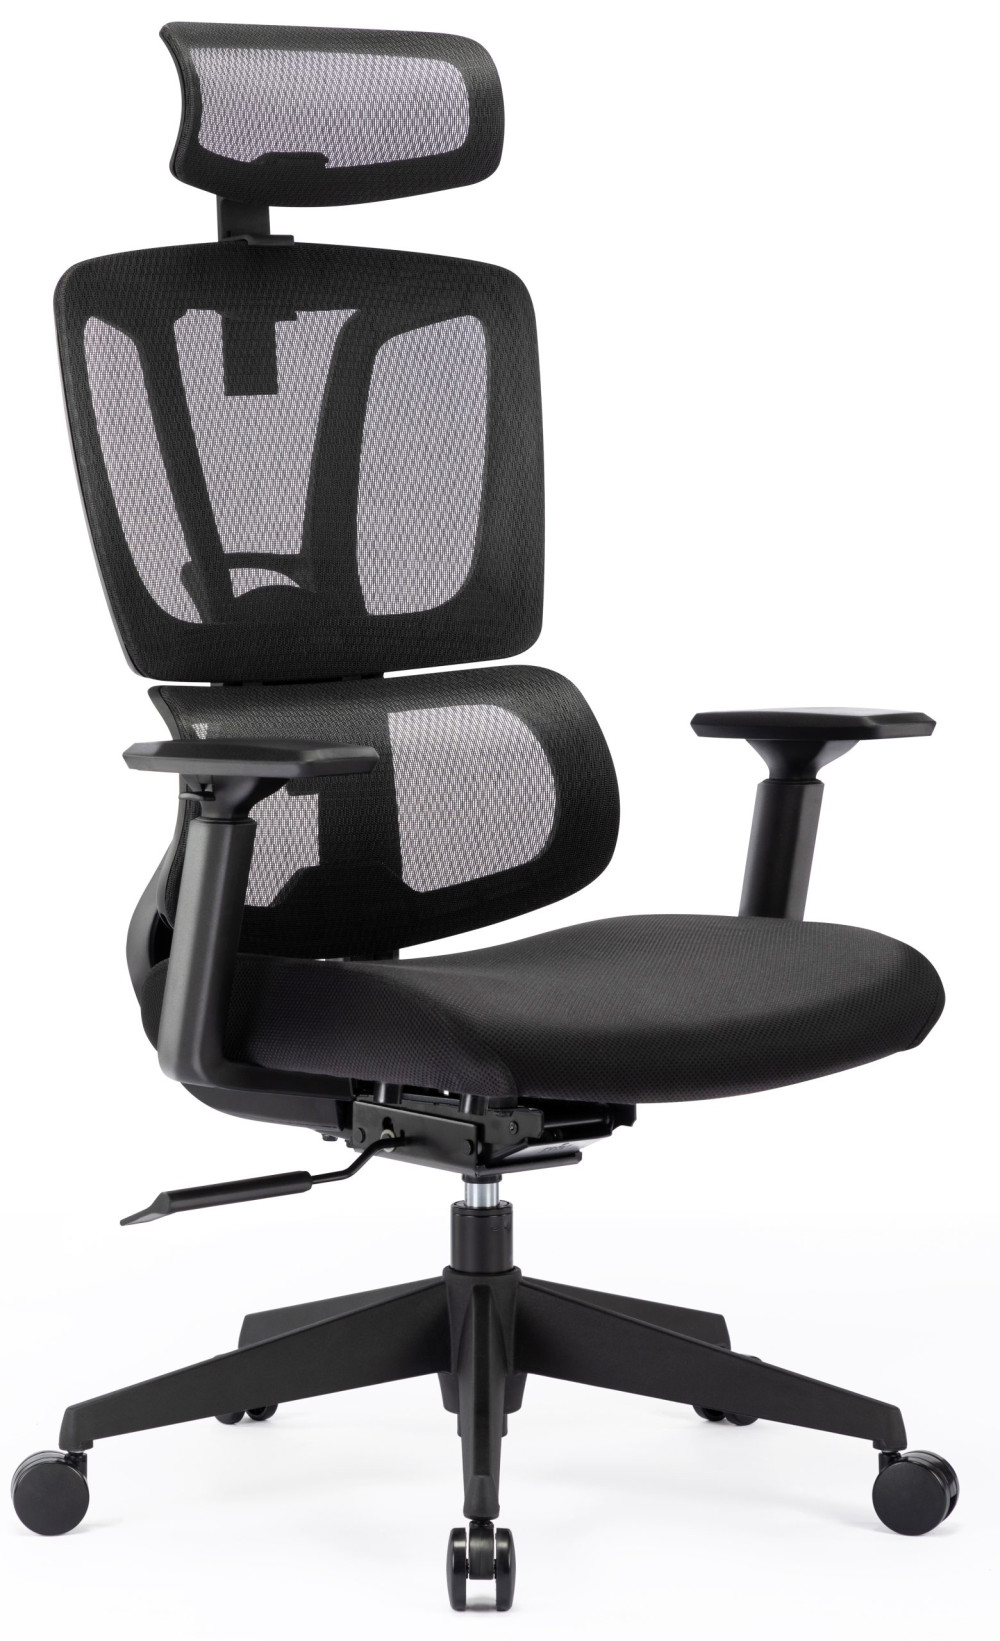 ANTARES FAMORA ergonomikus irodai szék, fekete váz